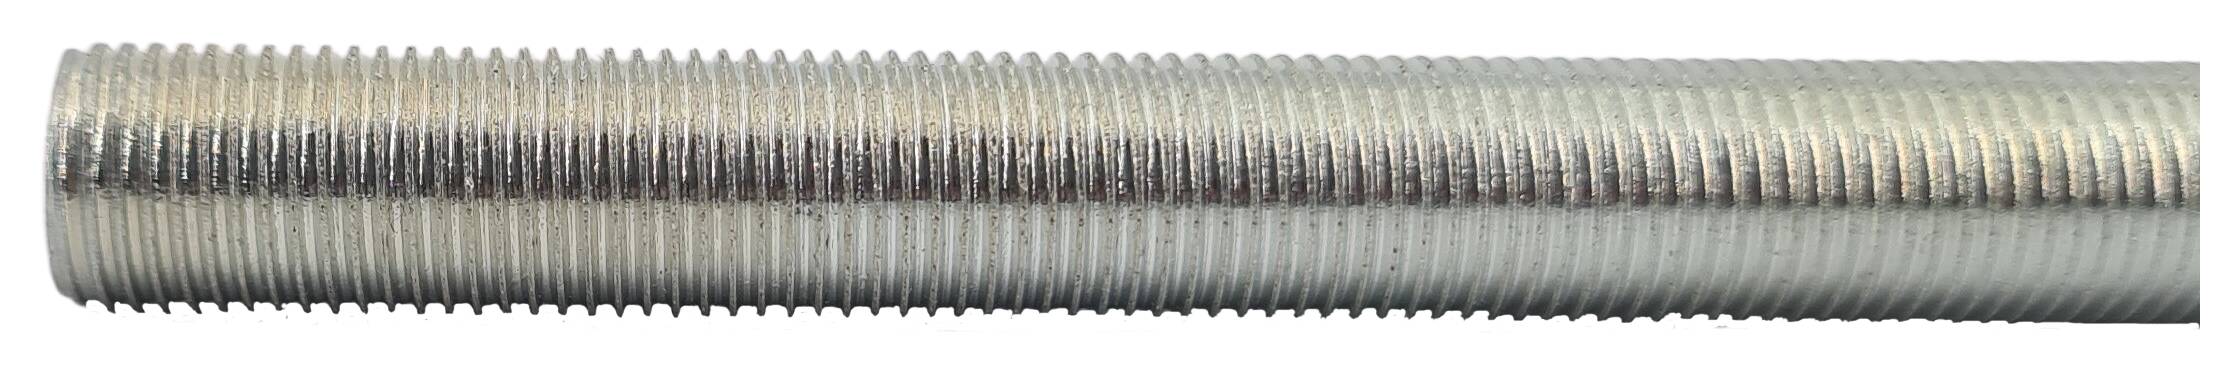 iron thread tube M10x1x280 round zinc